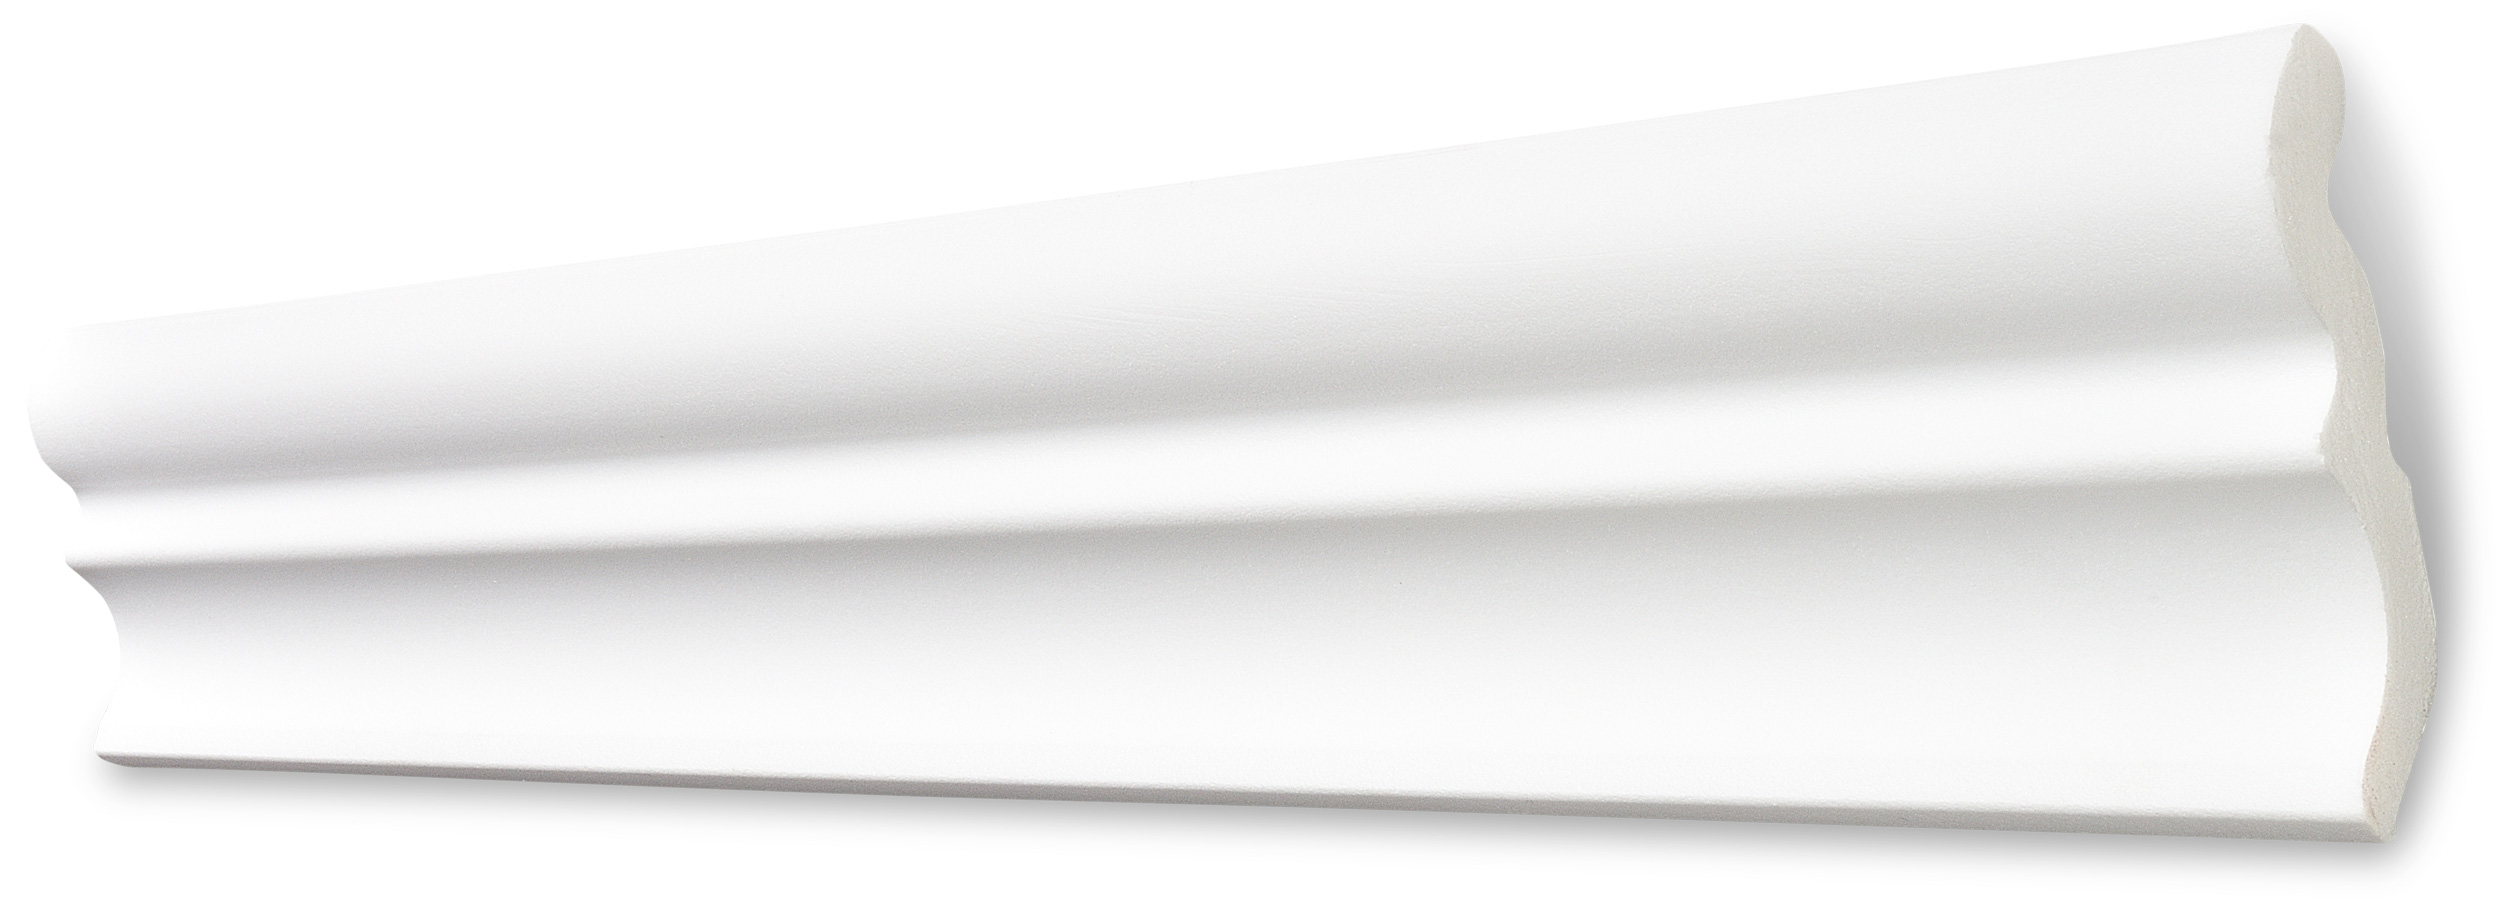 Decosa Zierprofil C80 (Serena), weiß, 70 x 75 mm, Länge: 2 m